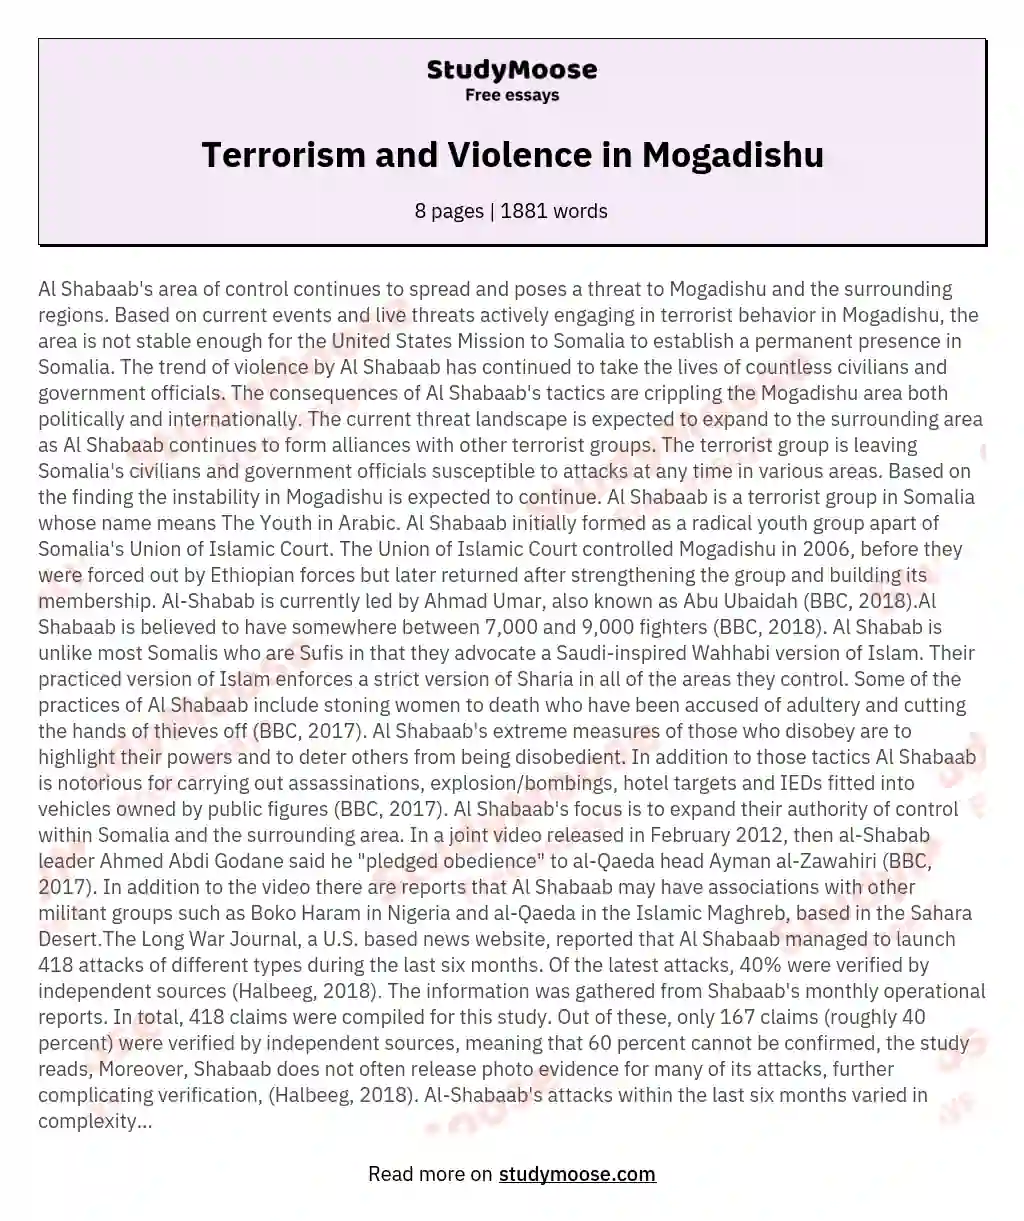 Terrorism and Violence in Mogadishu essay